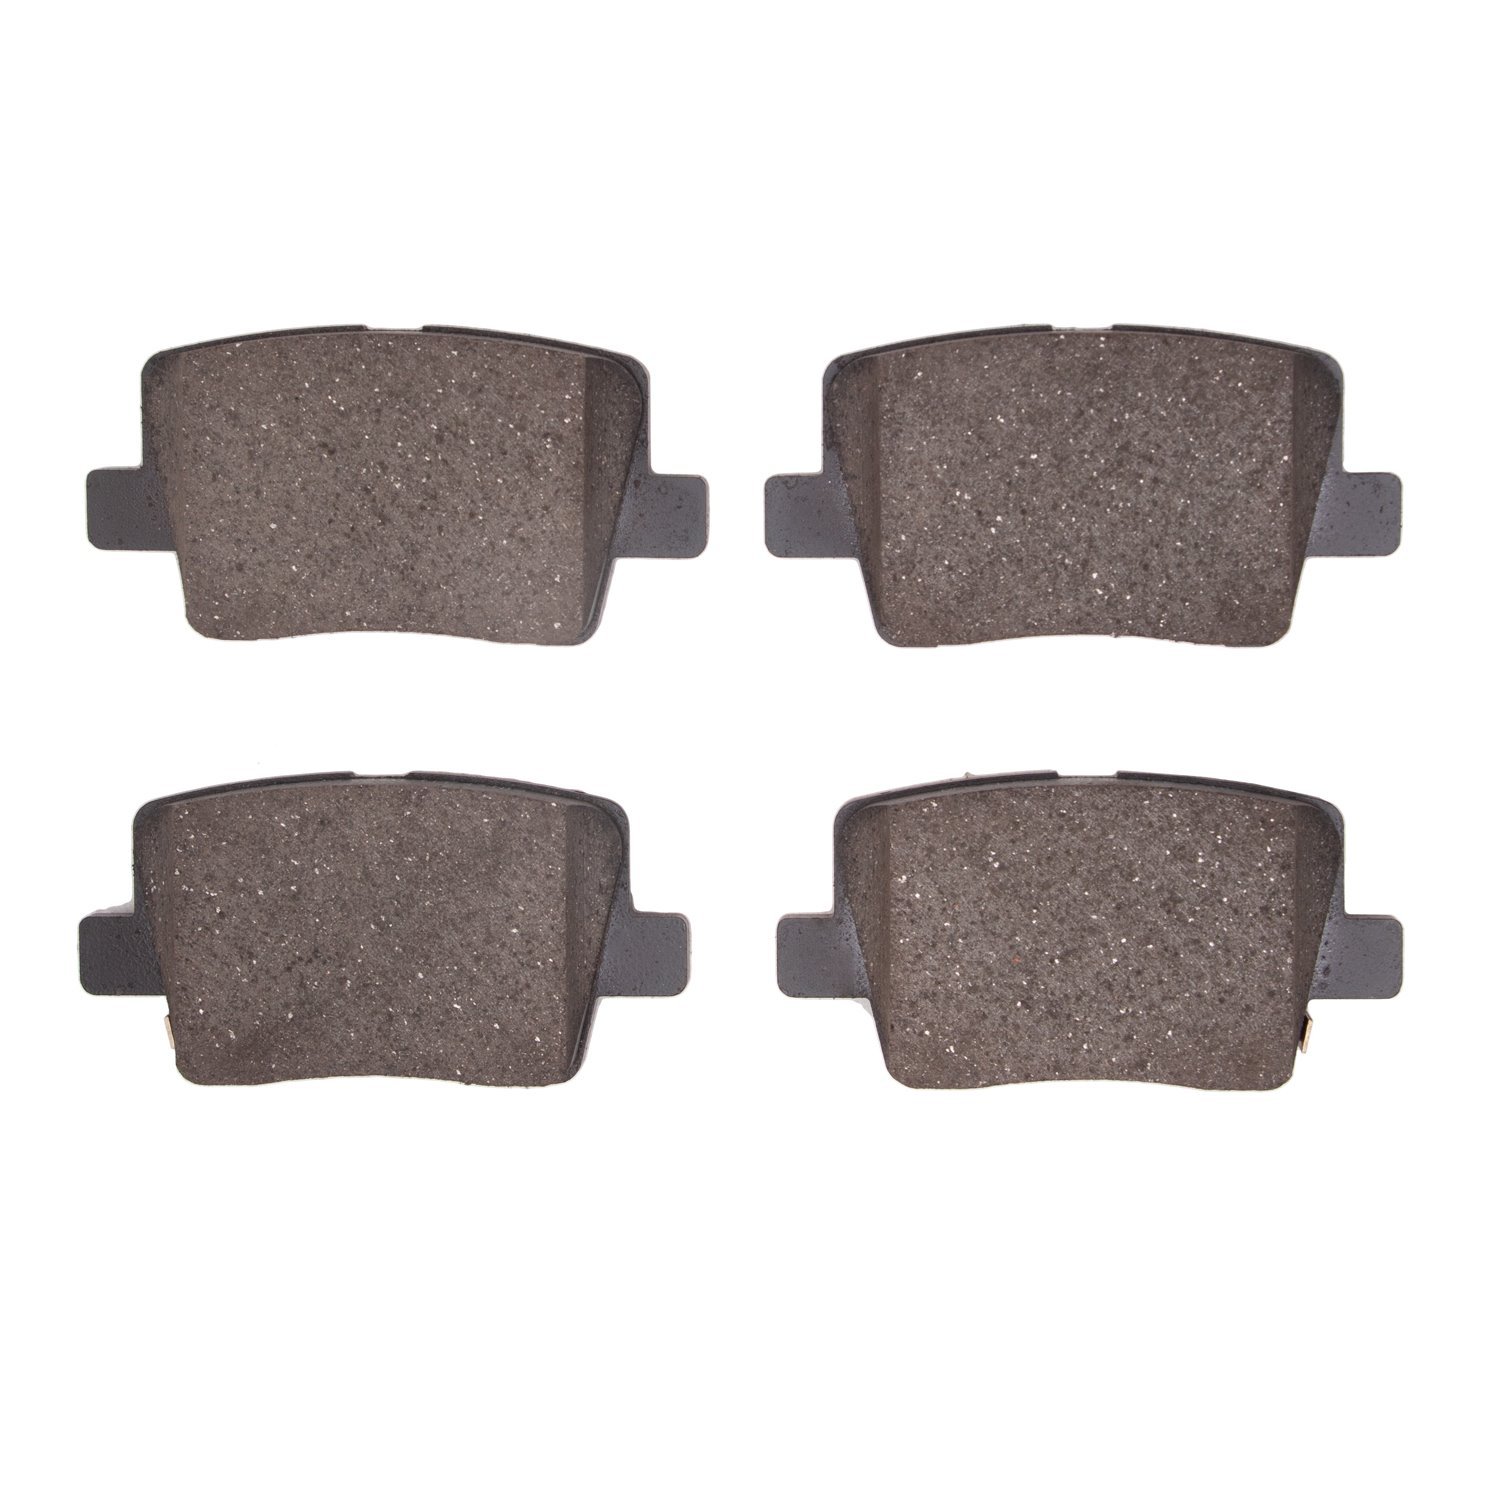 1551-2203-00 5000 Advanced Ceramic Brake Pads, Fits Select Kia/Hyundai/Genesis, Position: Rear